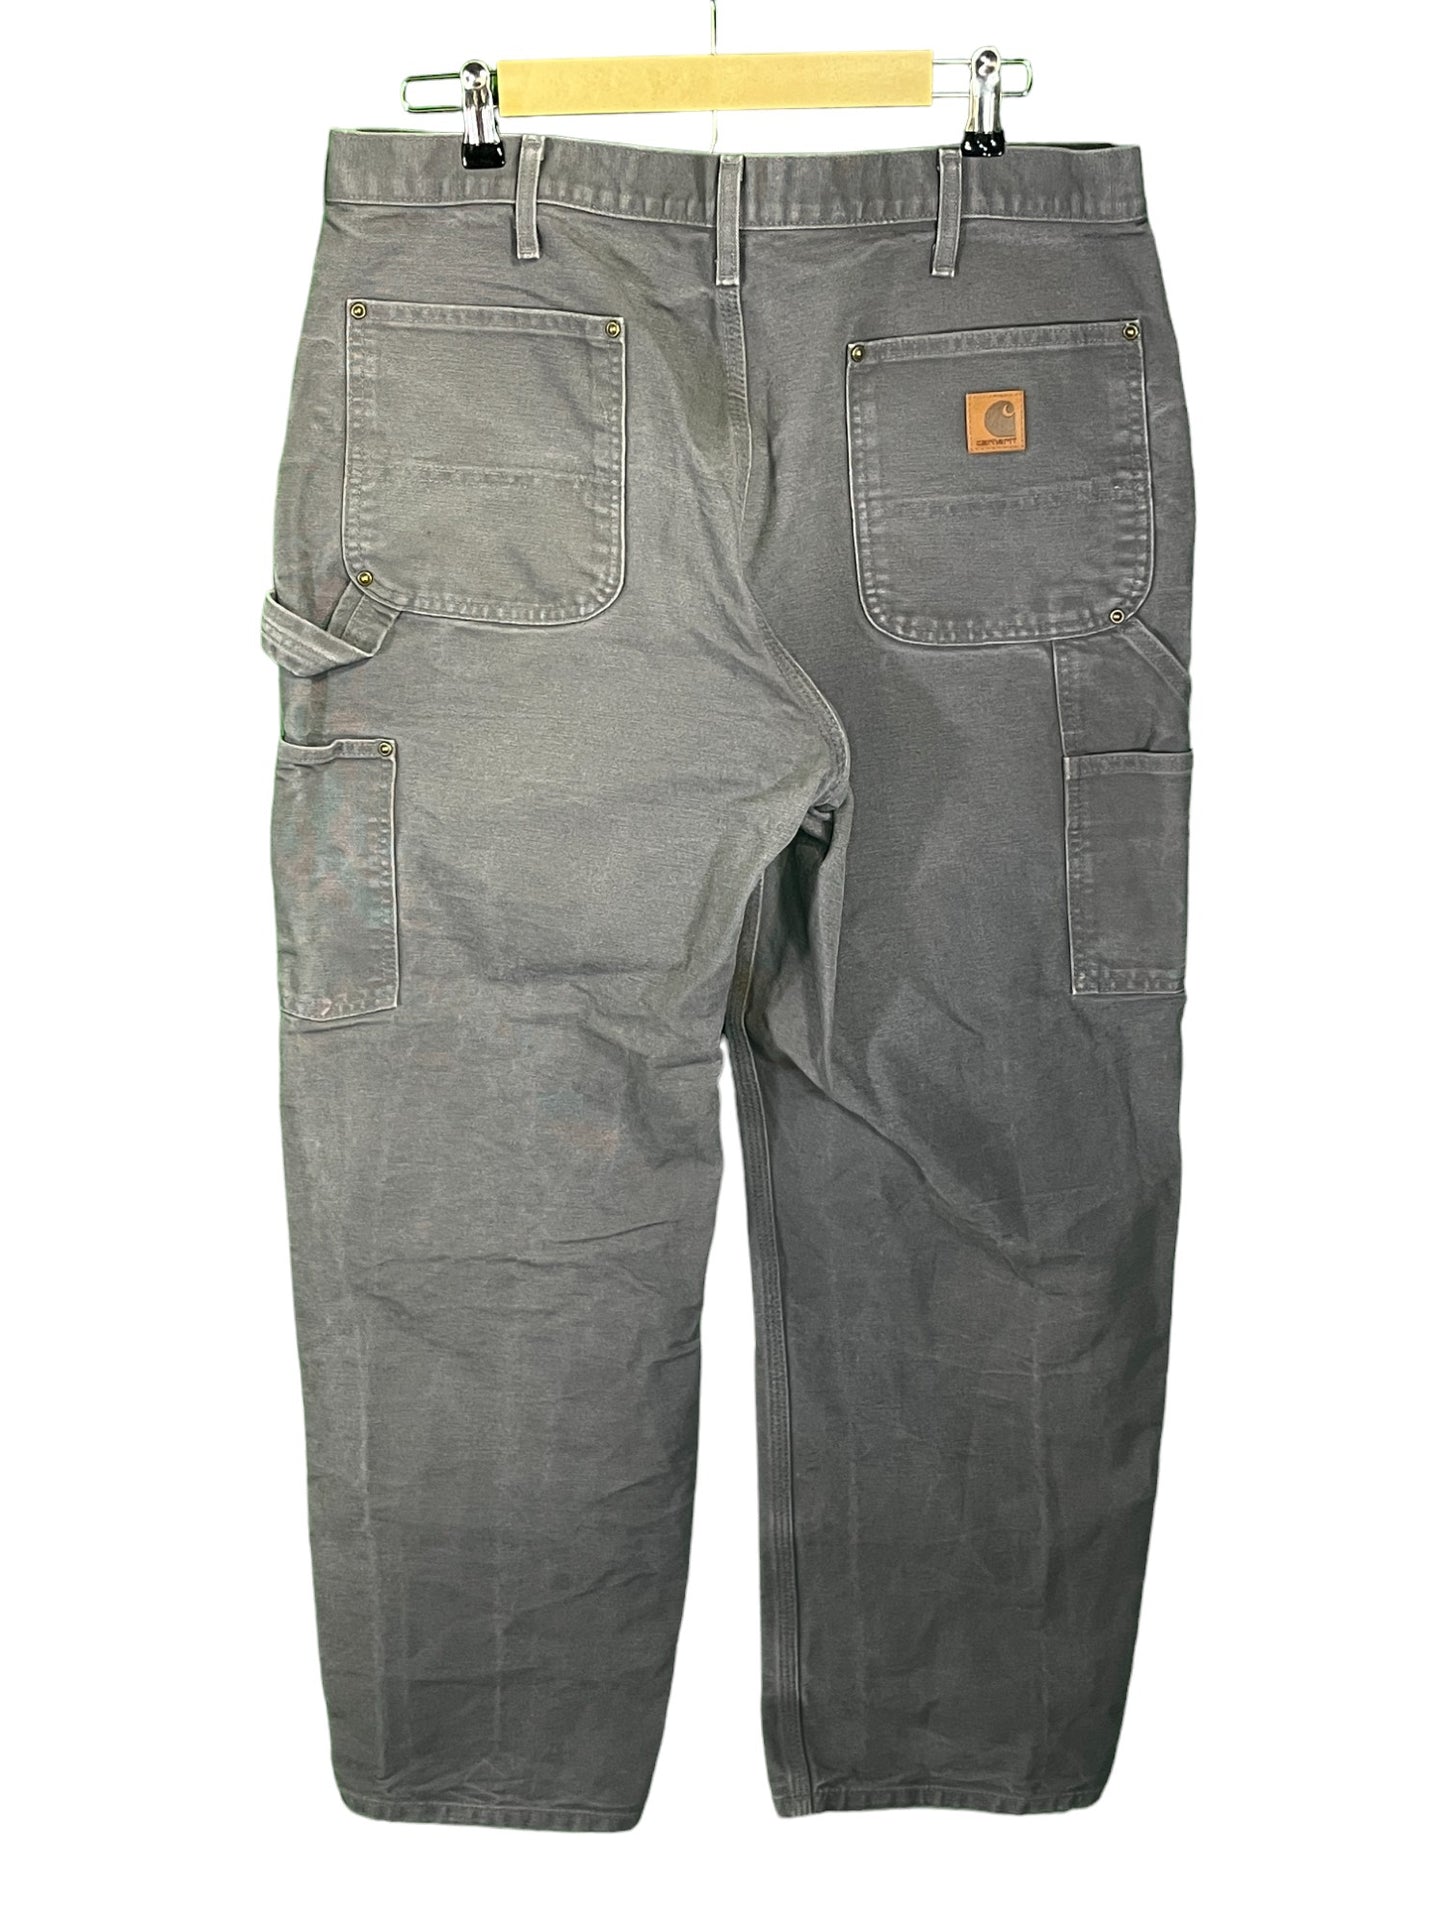 Vintage Carhartt Double Knee Carpenter Pants Gravel Grey Size 36x30